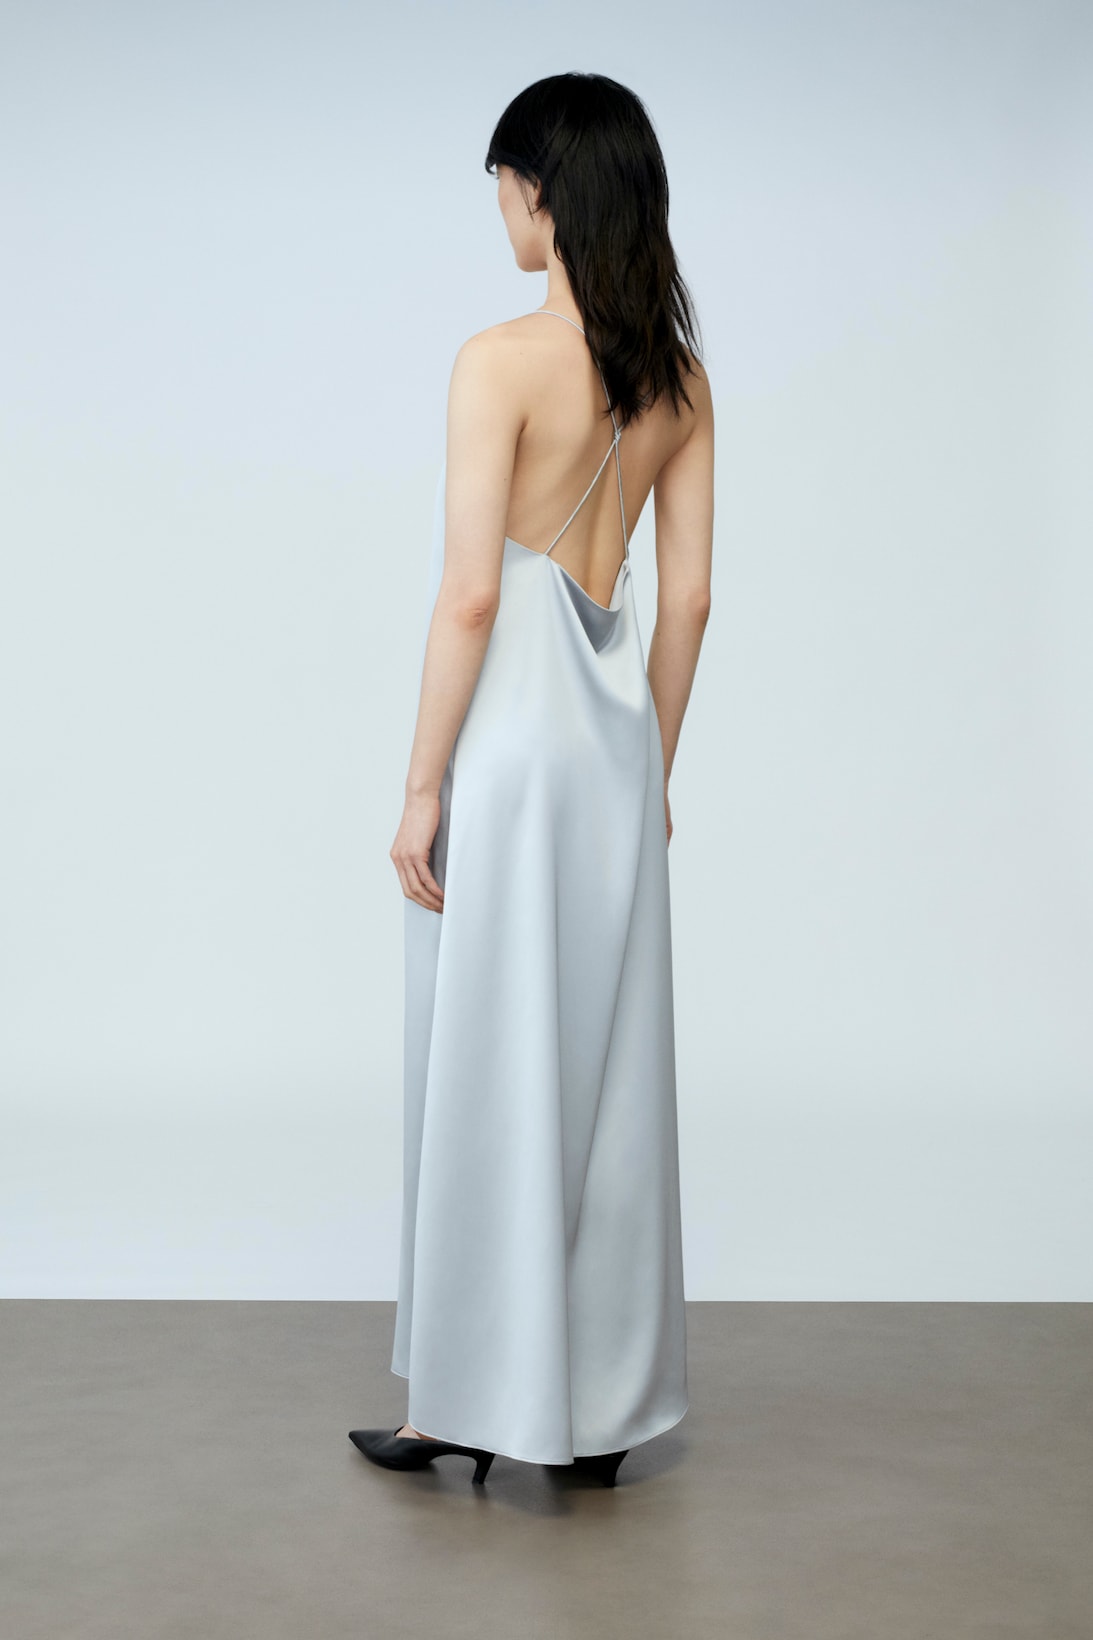 sora choi cos spring womenswear summer collection lookbook silver gray dress black heels